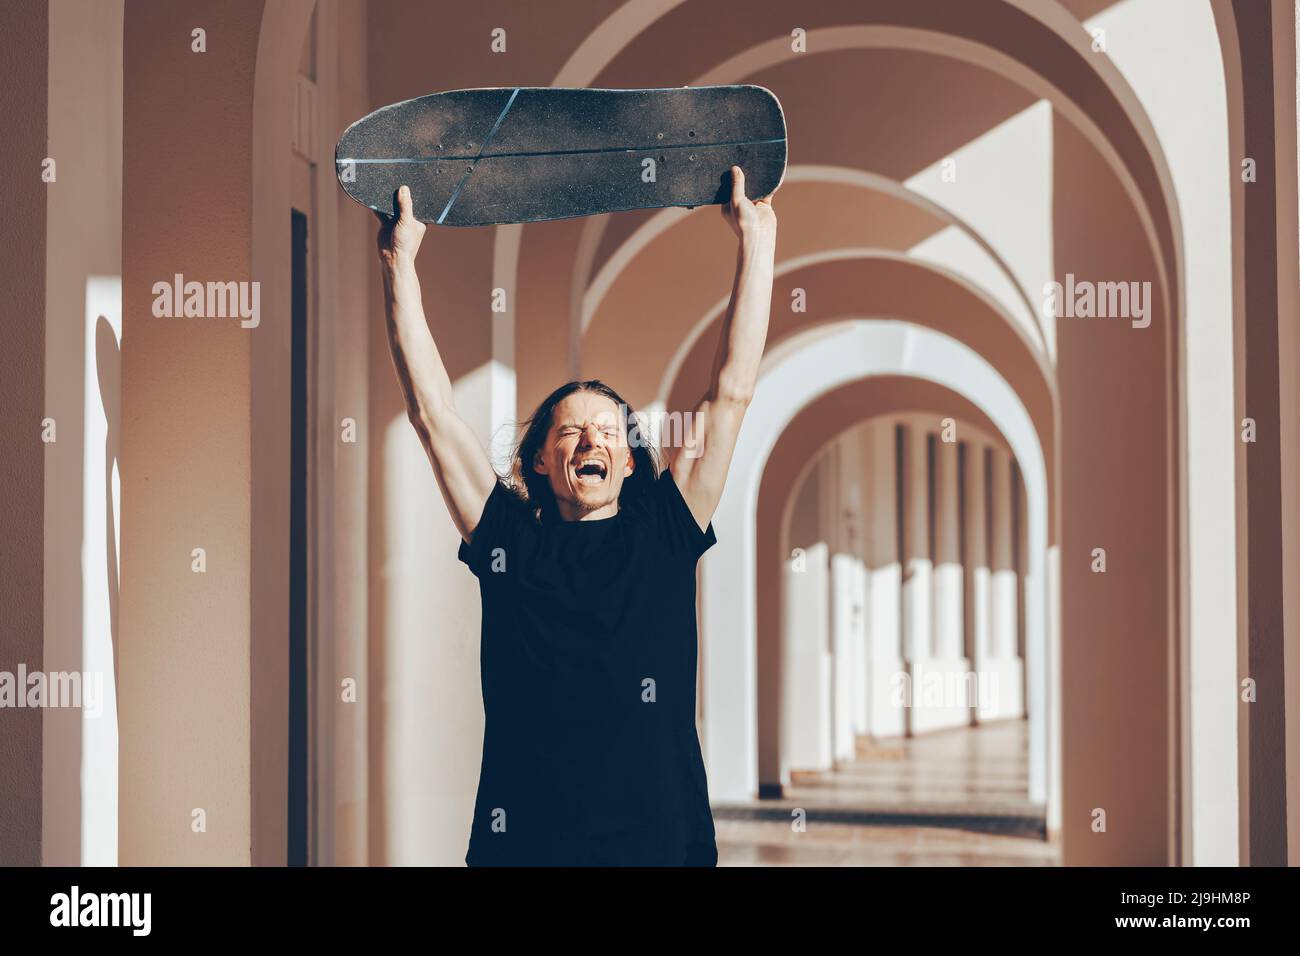 Man lifting skateboard above head shouting in arcade Stock Photo